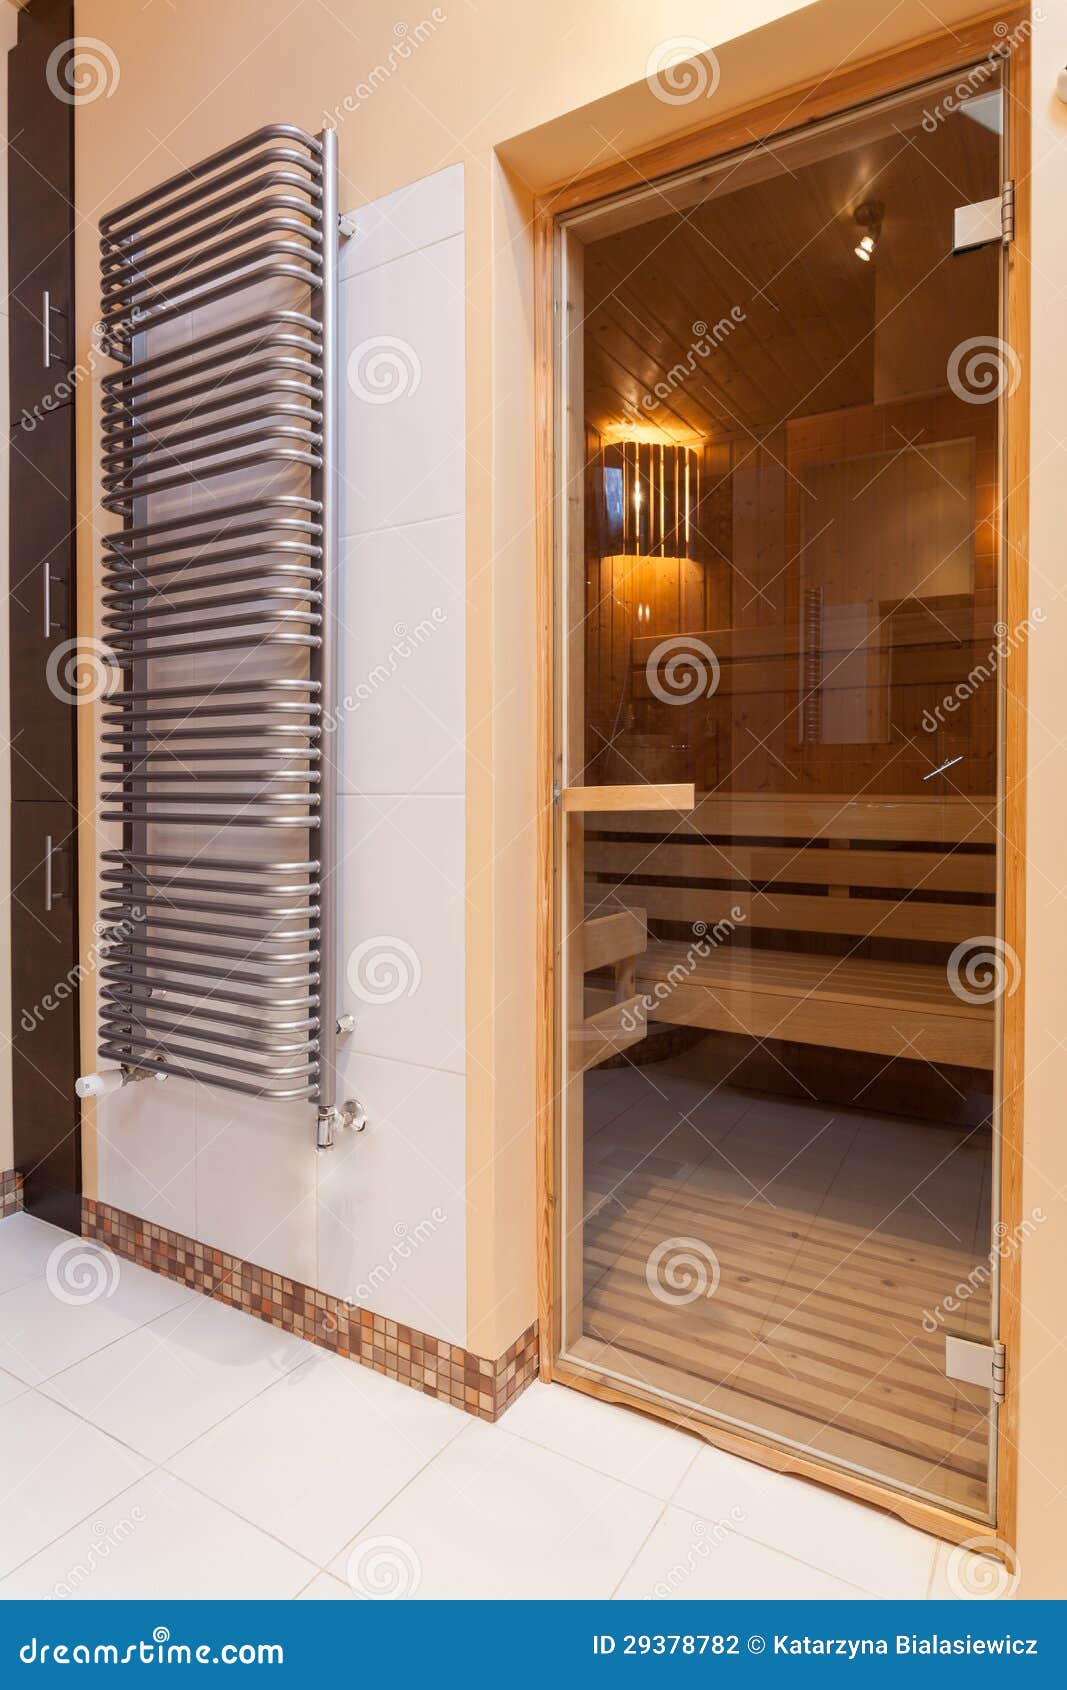 classy house - sauna